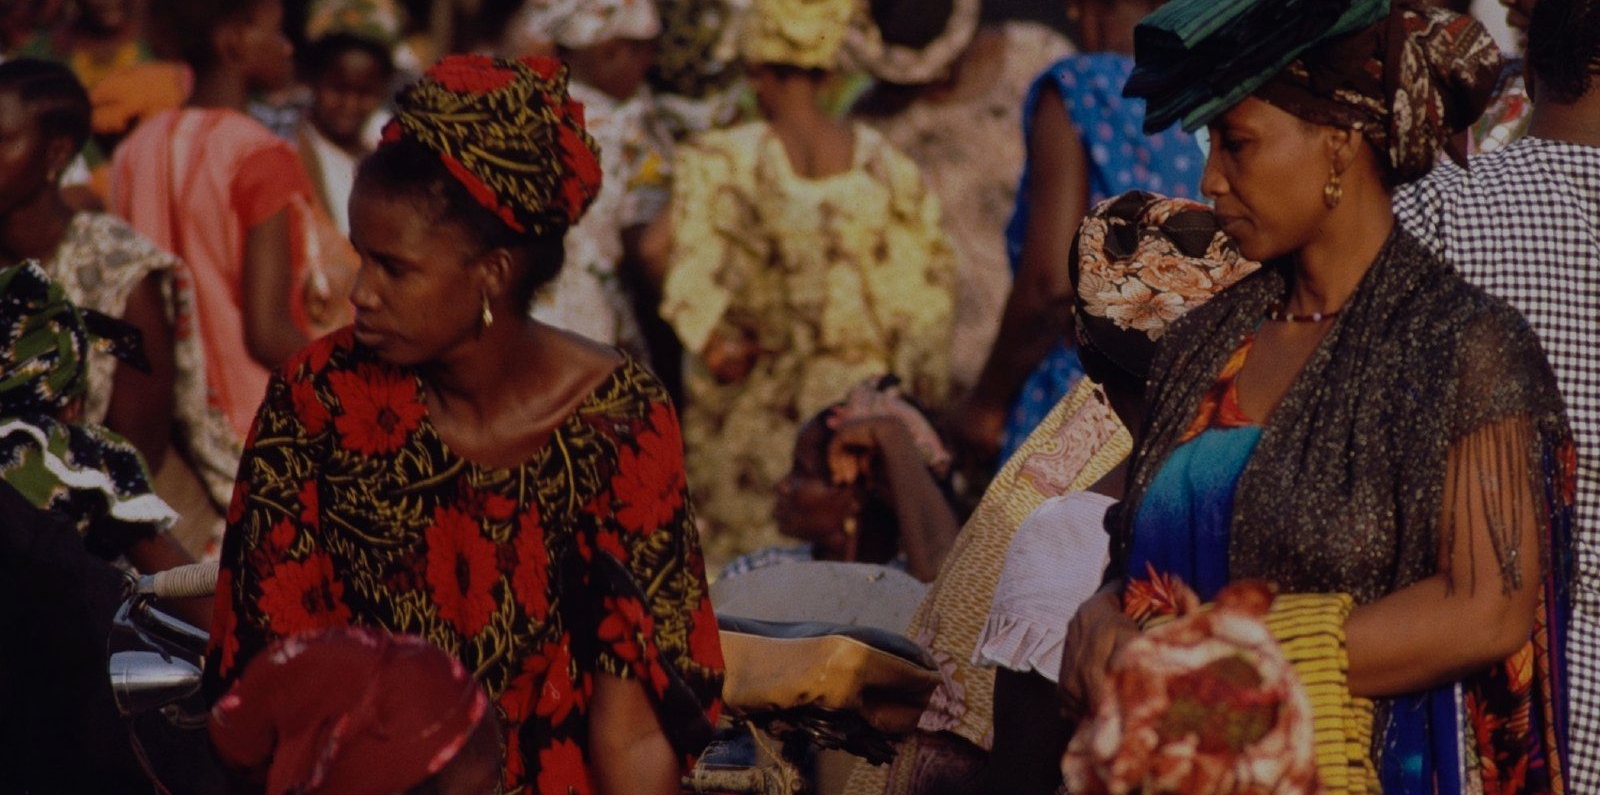 Women shopping at the market in Senegal